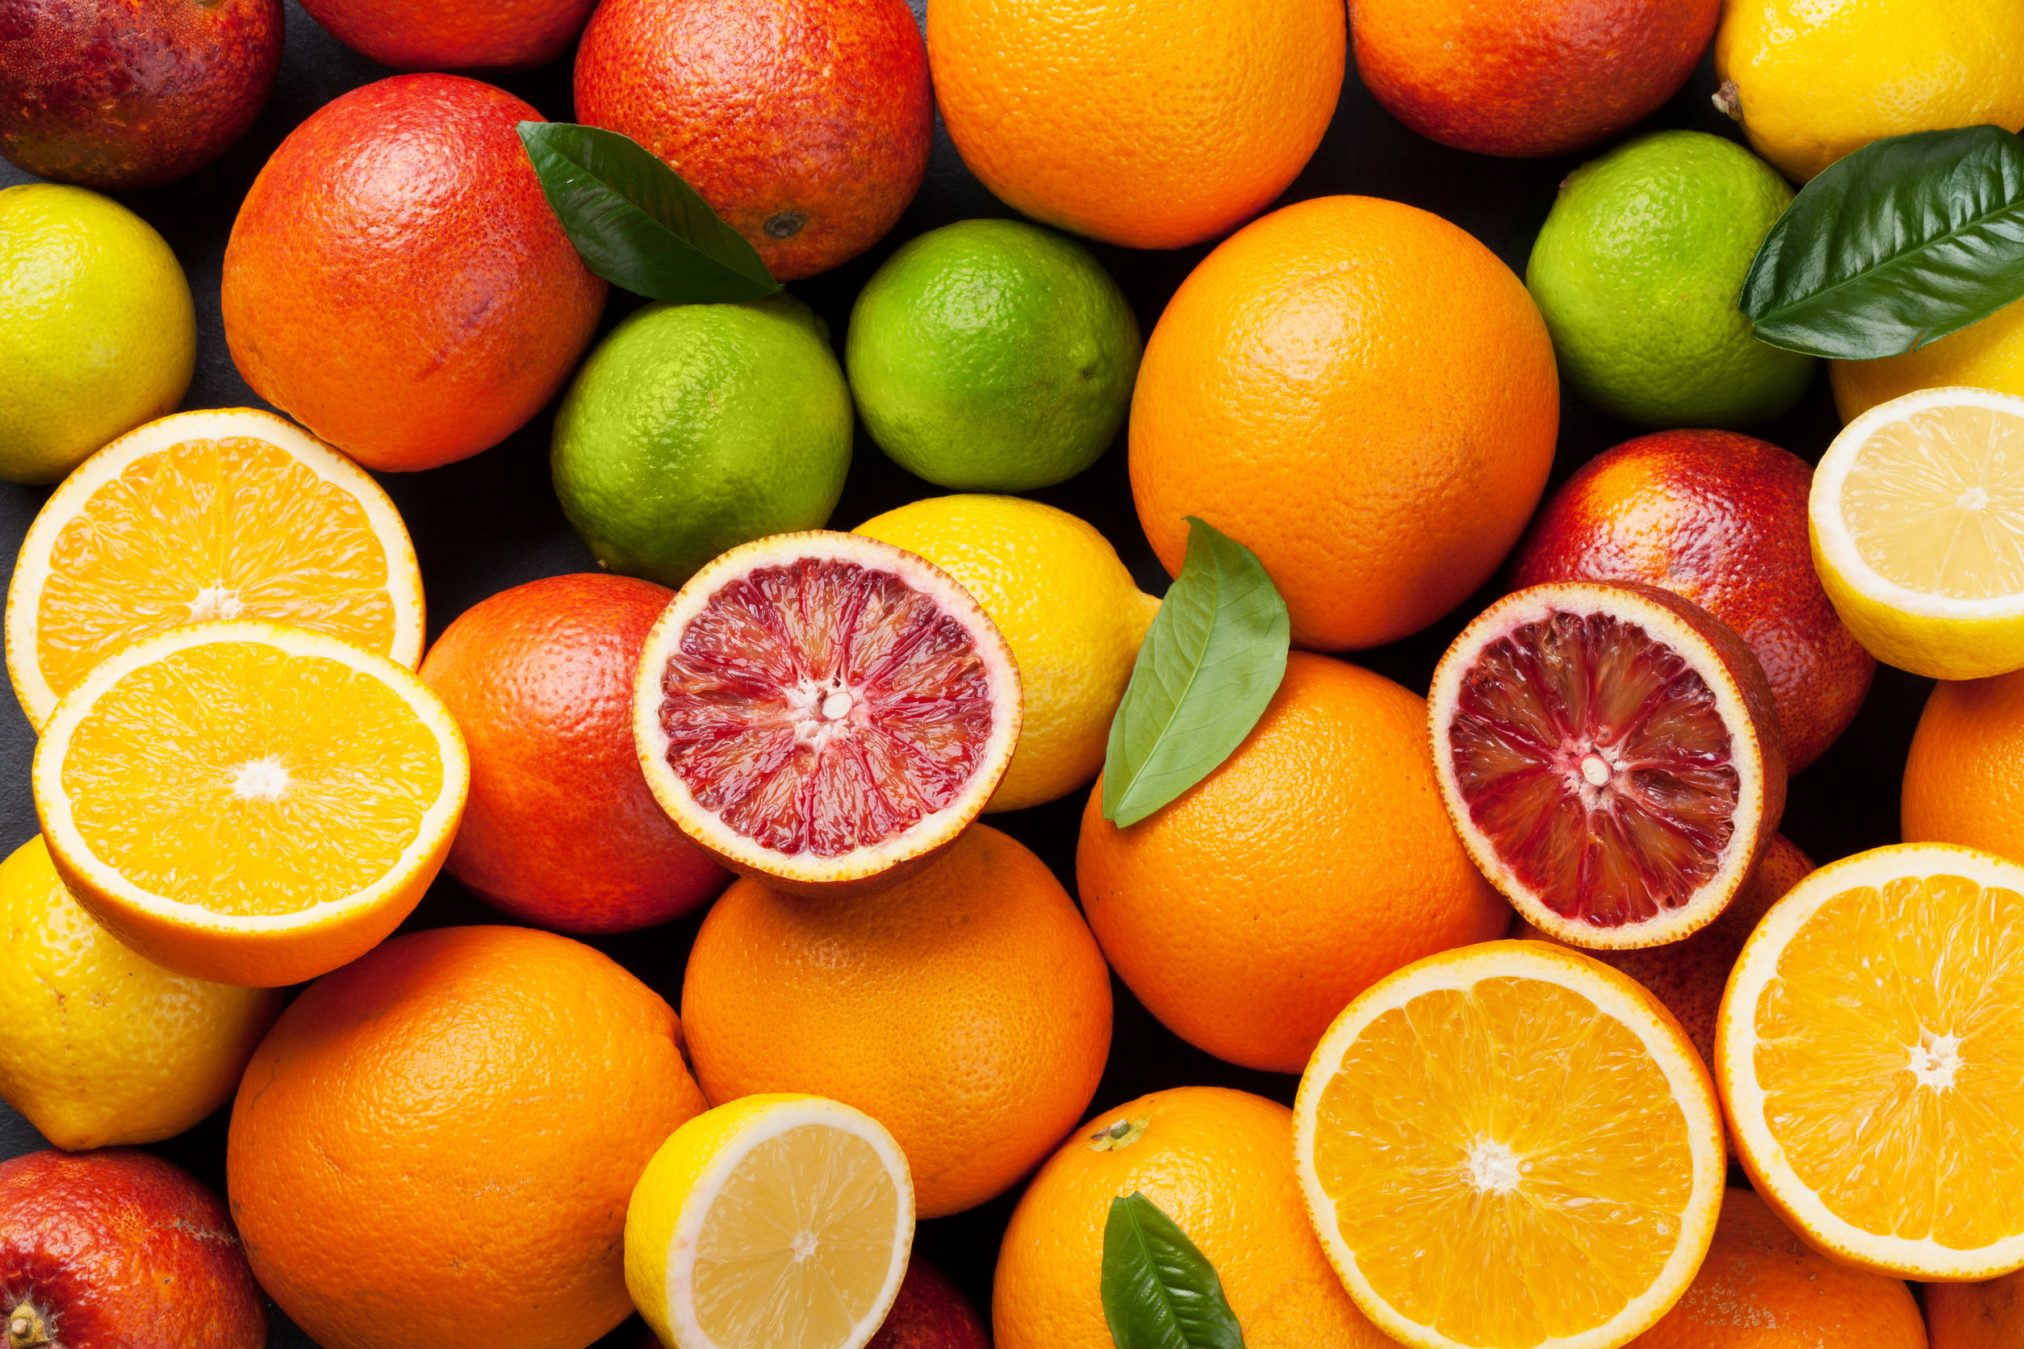 oranges, lemons and limes